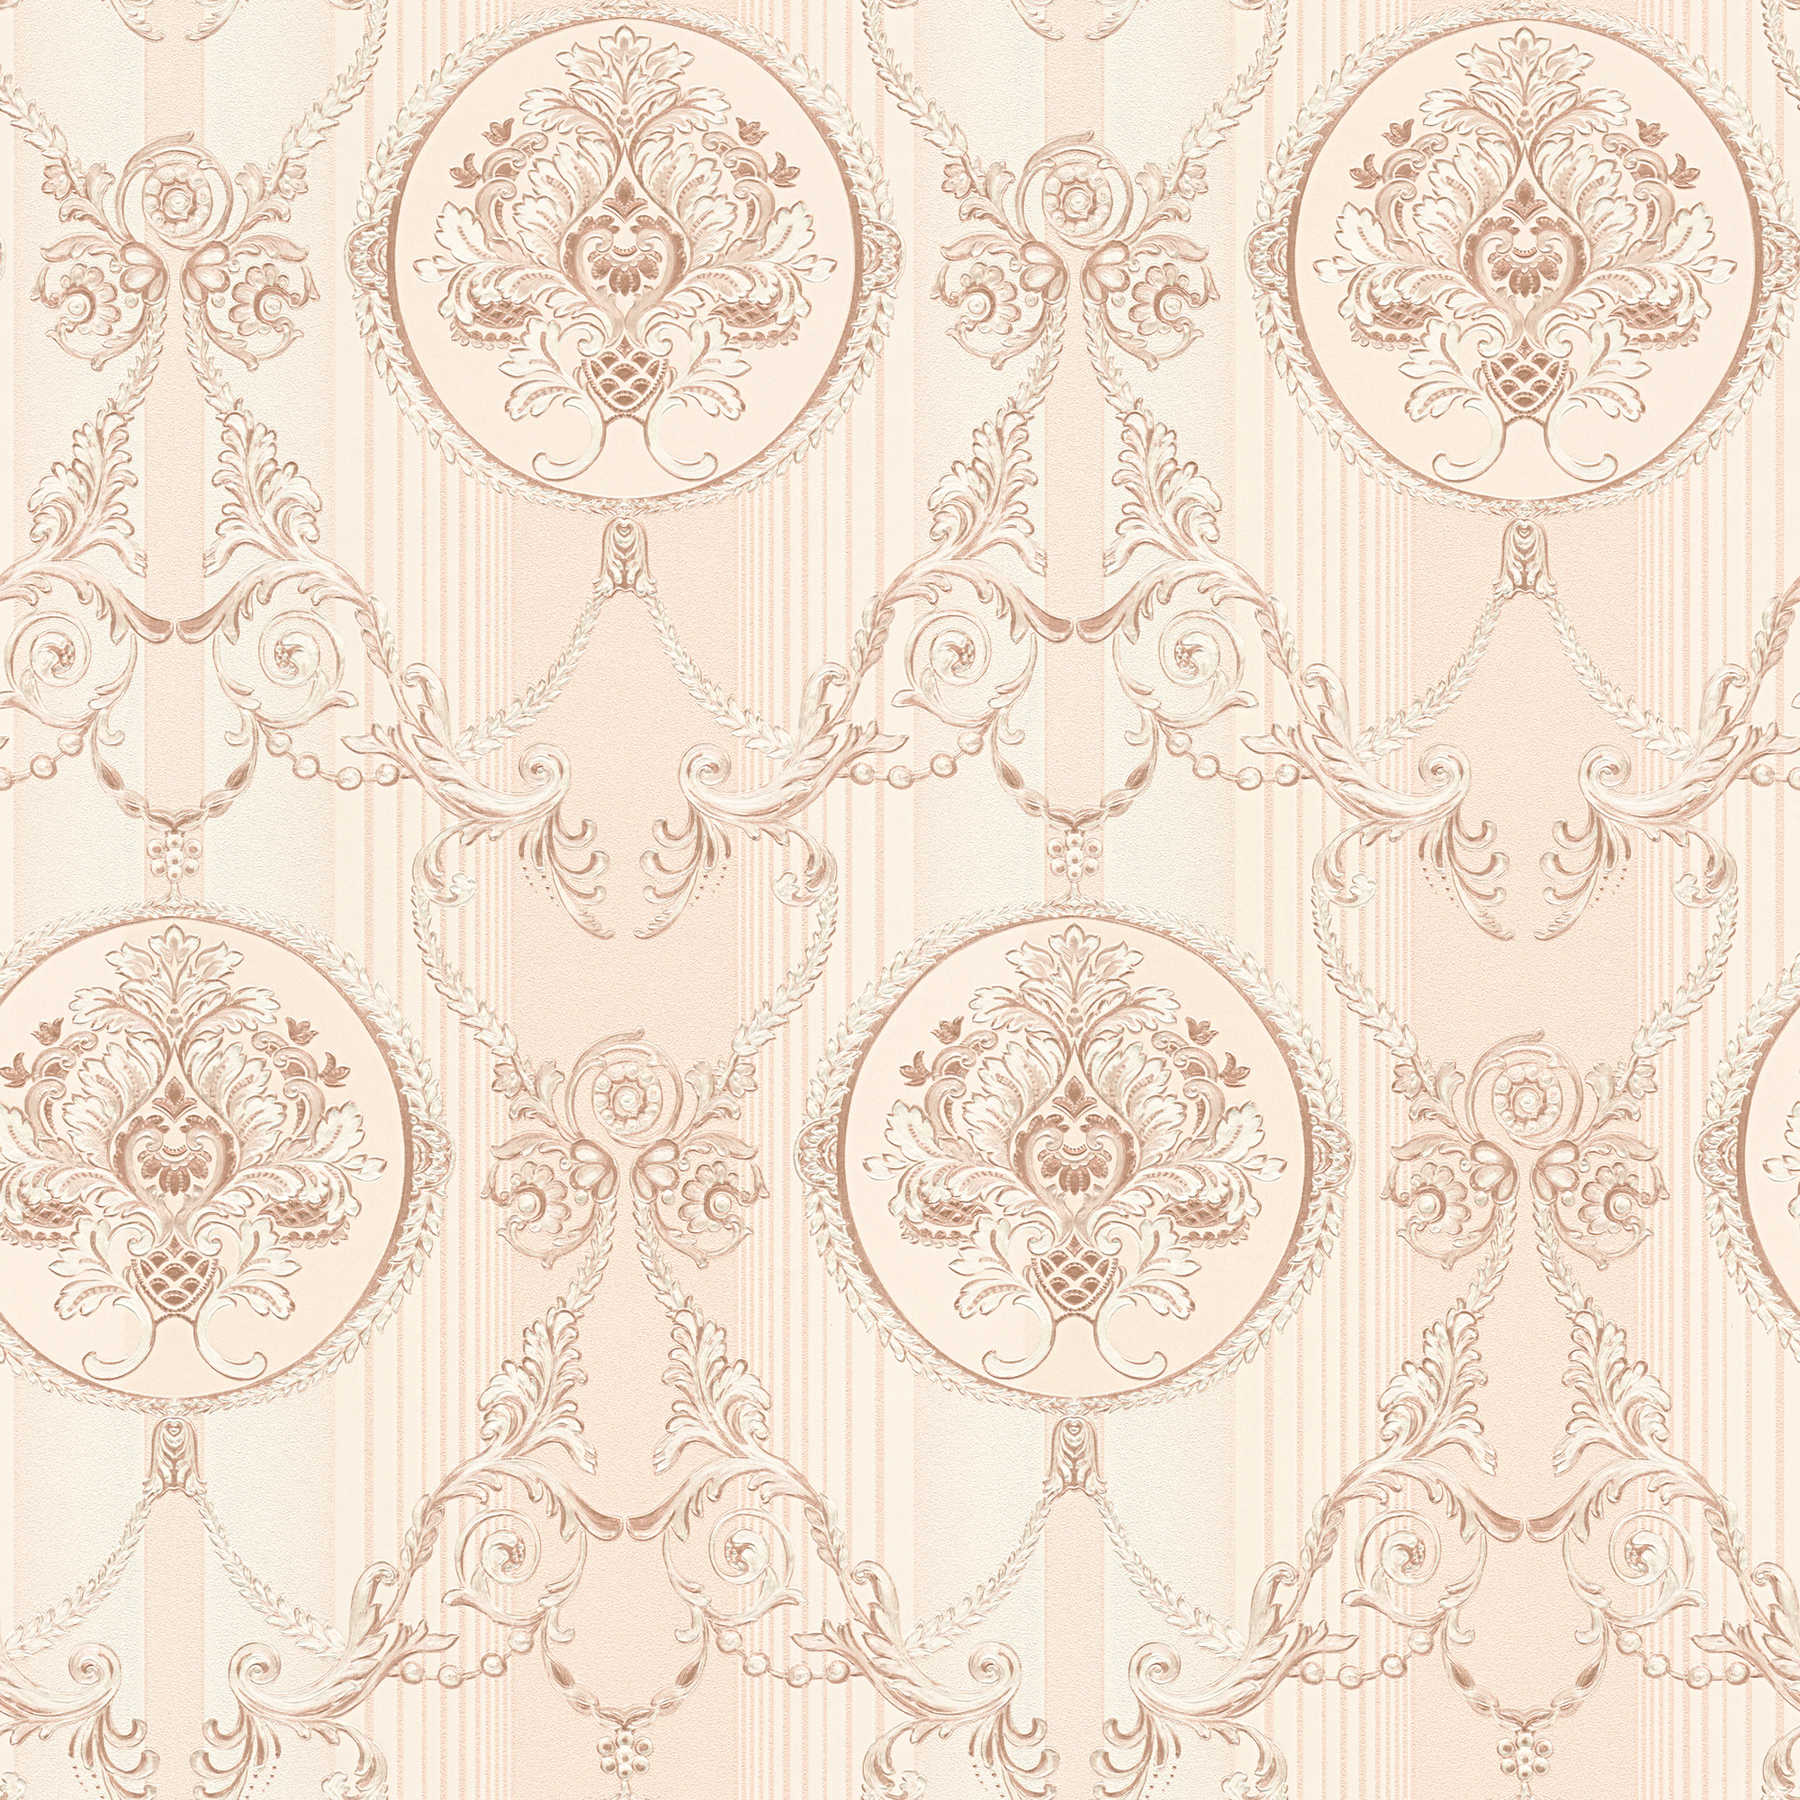         Neobarock Tapete mit Ornamentmuster & Streifen – Creme, Rosa
    